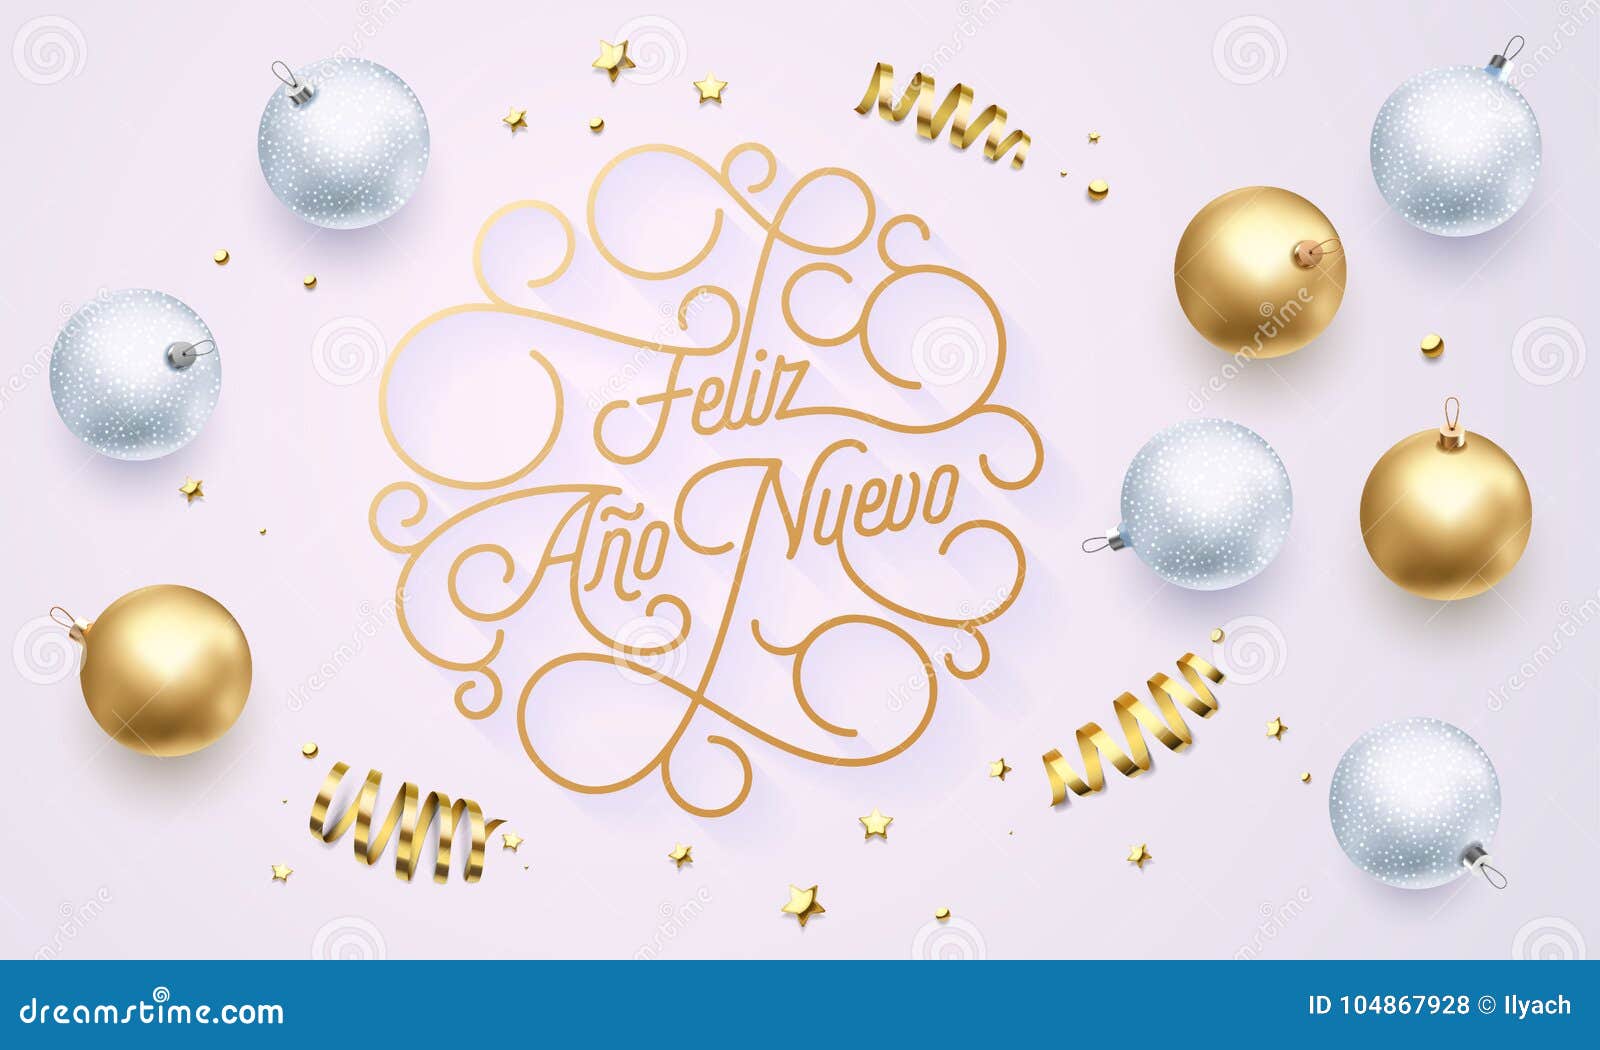 feliz ano nuevo spanish happy new year navidad flourish golden calligraphy lettering of swash gold greeting card .  go